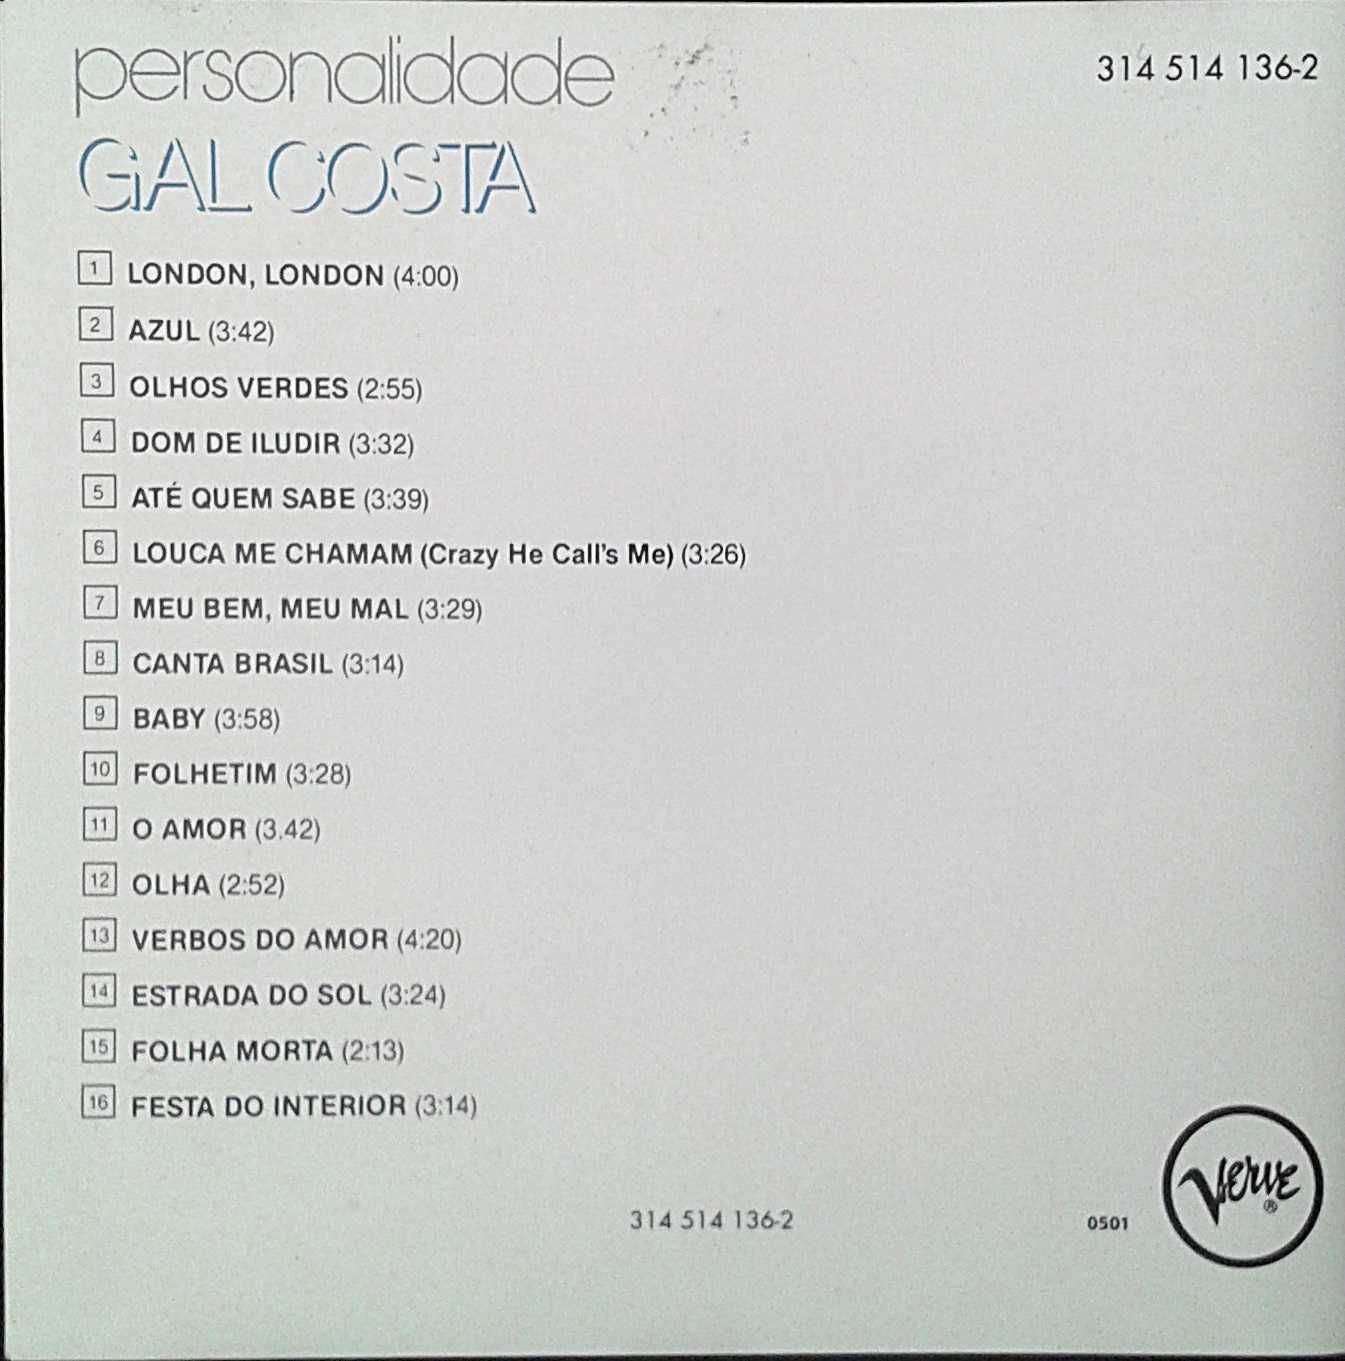 CD Gal Costa. Personalidade. Brasil. 16 tracks. Incl portes